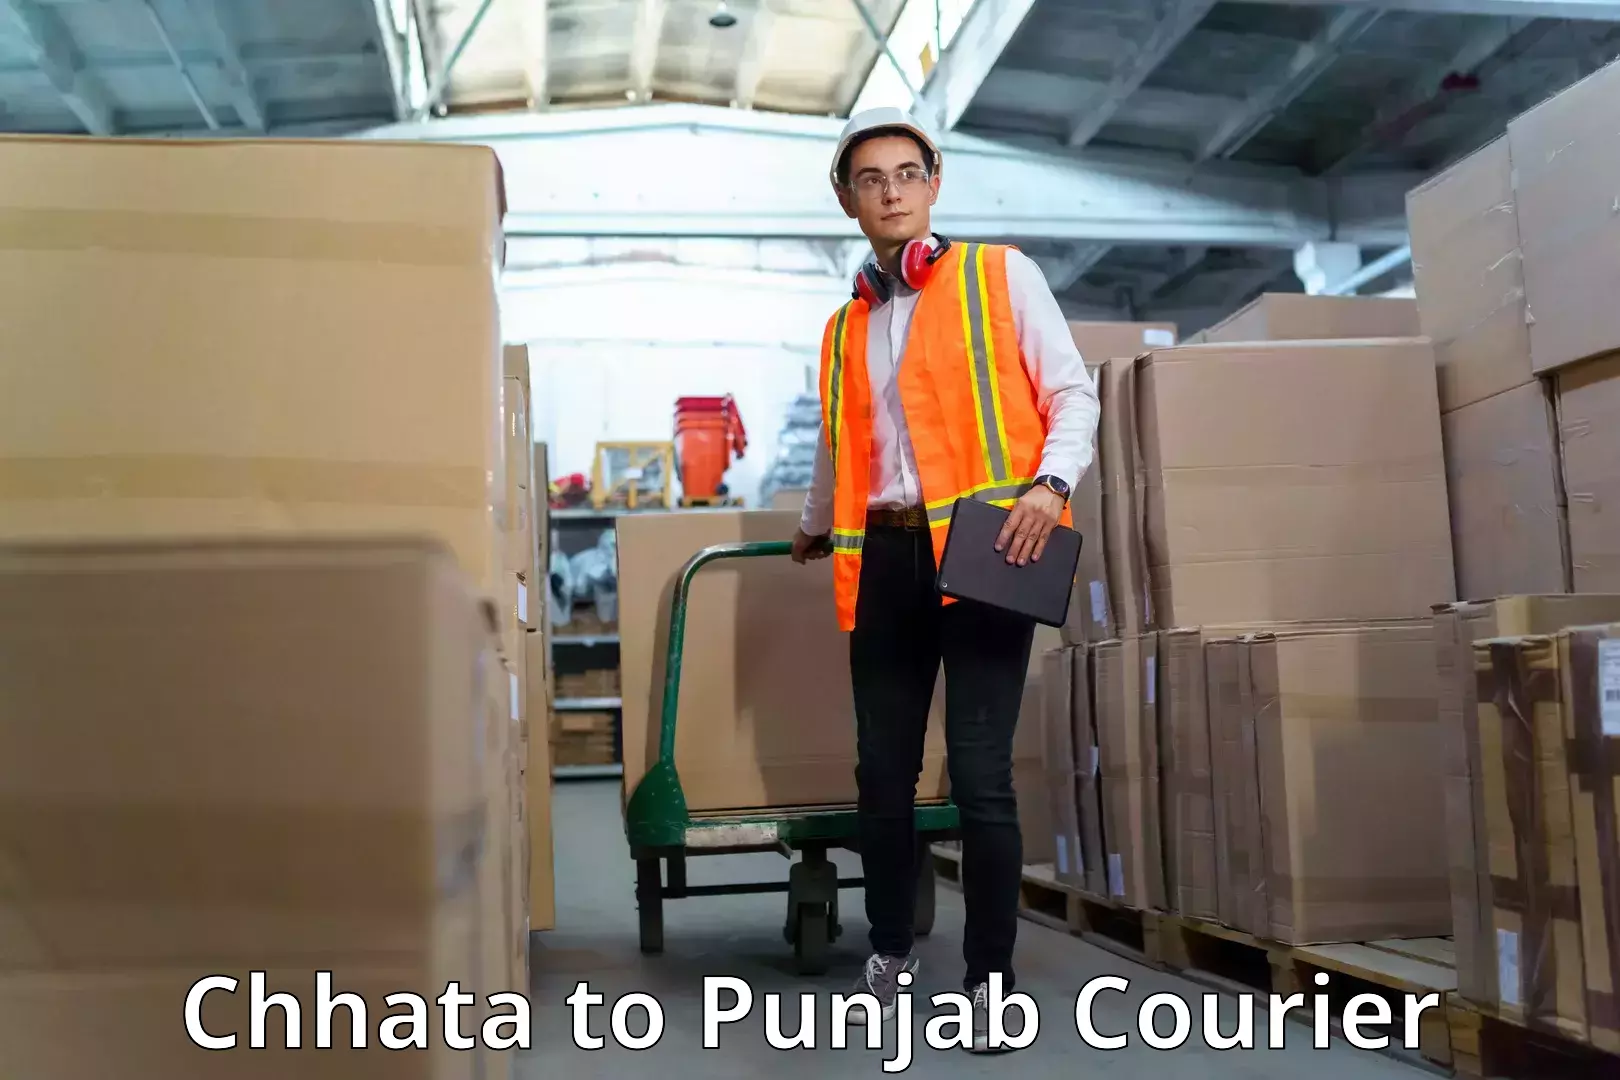 Courier service innovation Chhata to Batala